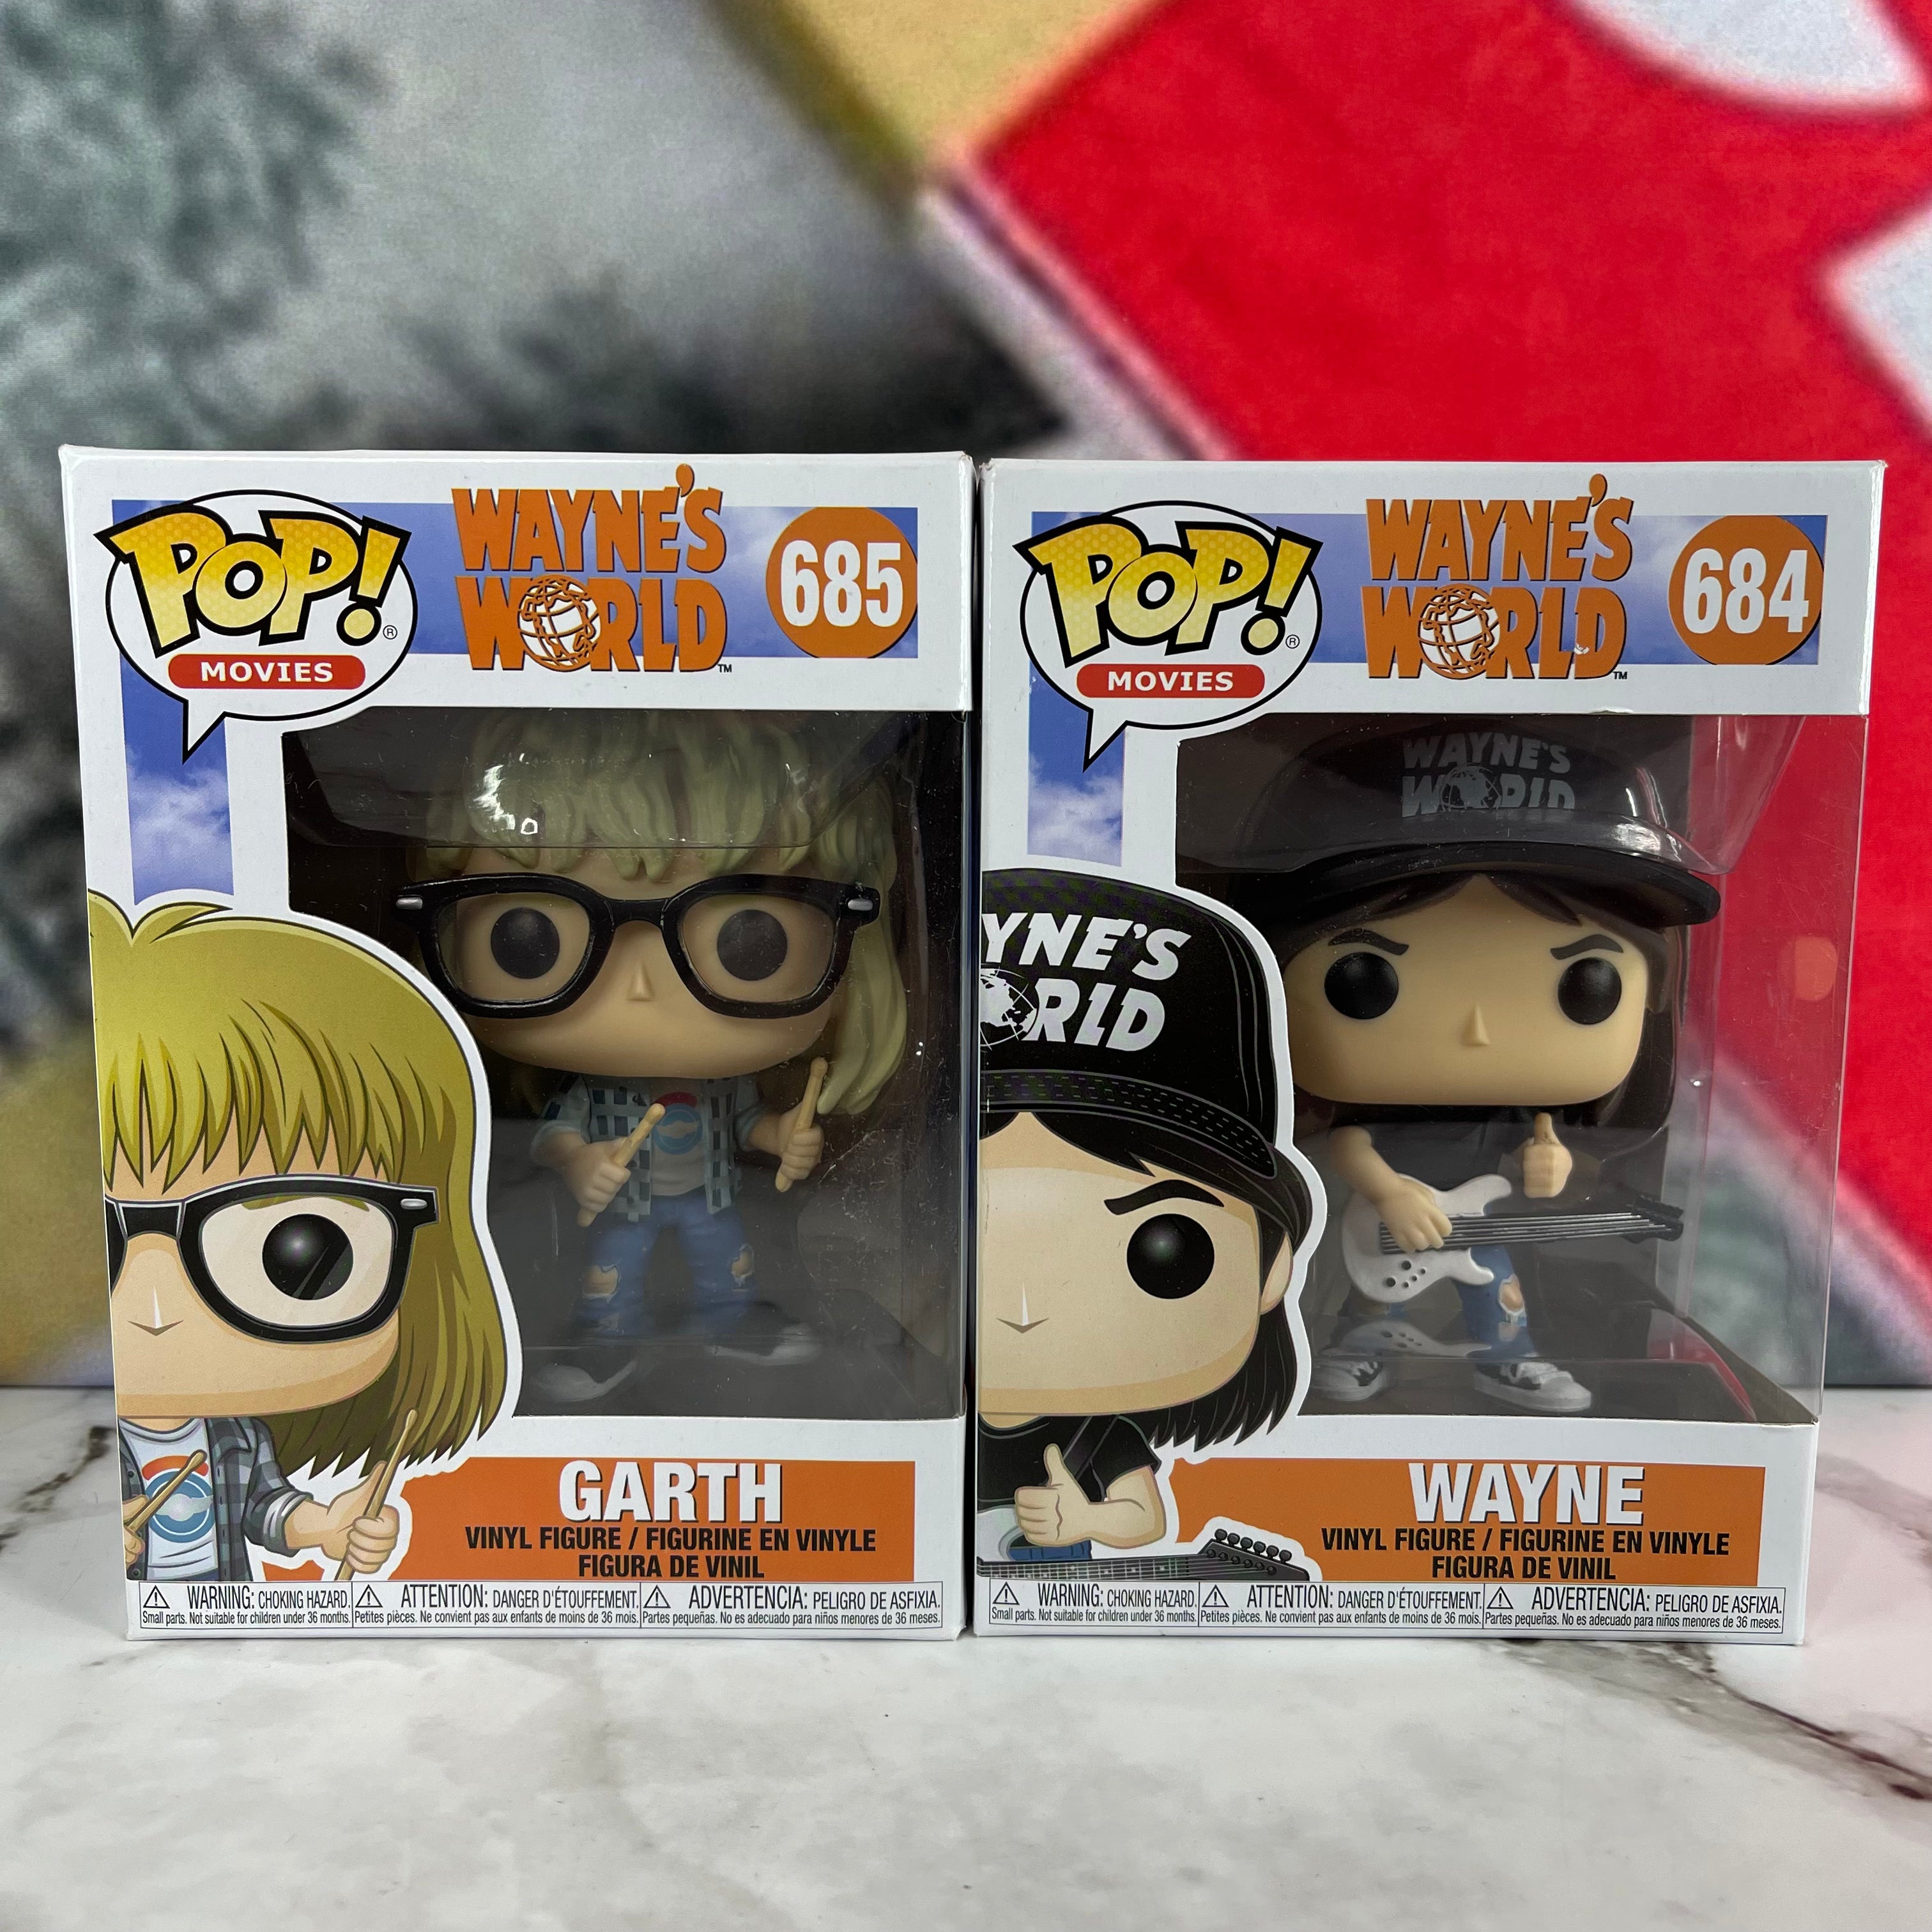 Funko created 'Wayne's World' POP! figurines of Wayne and Garth